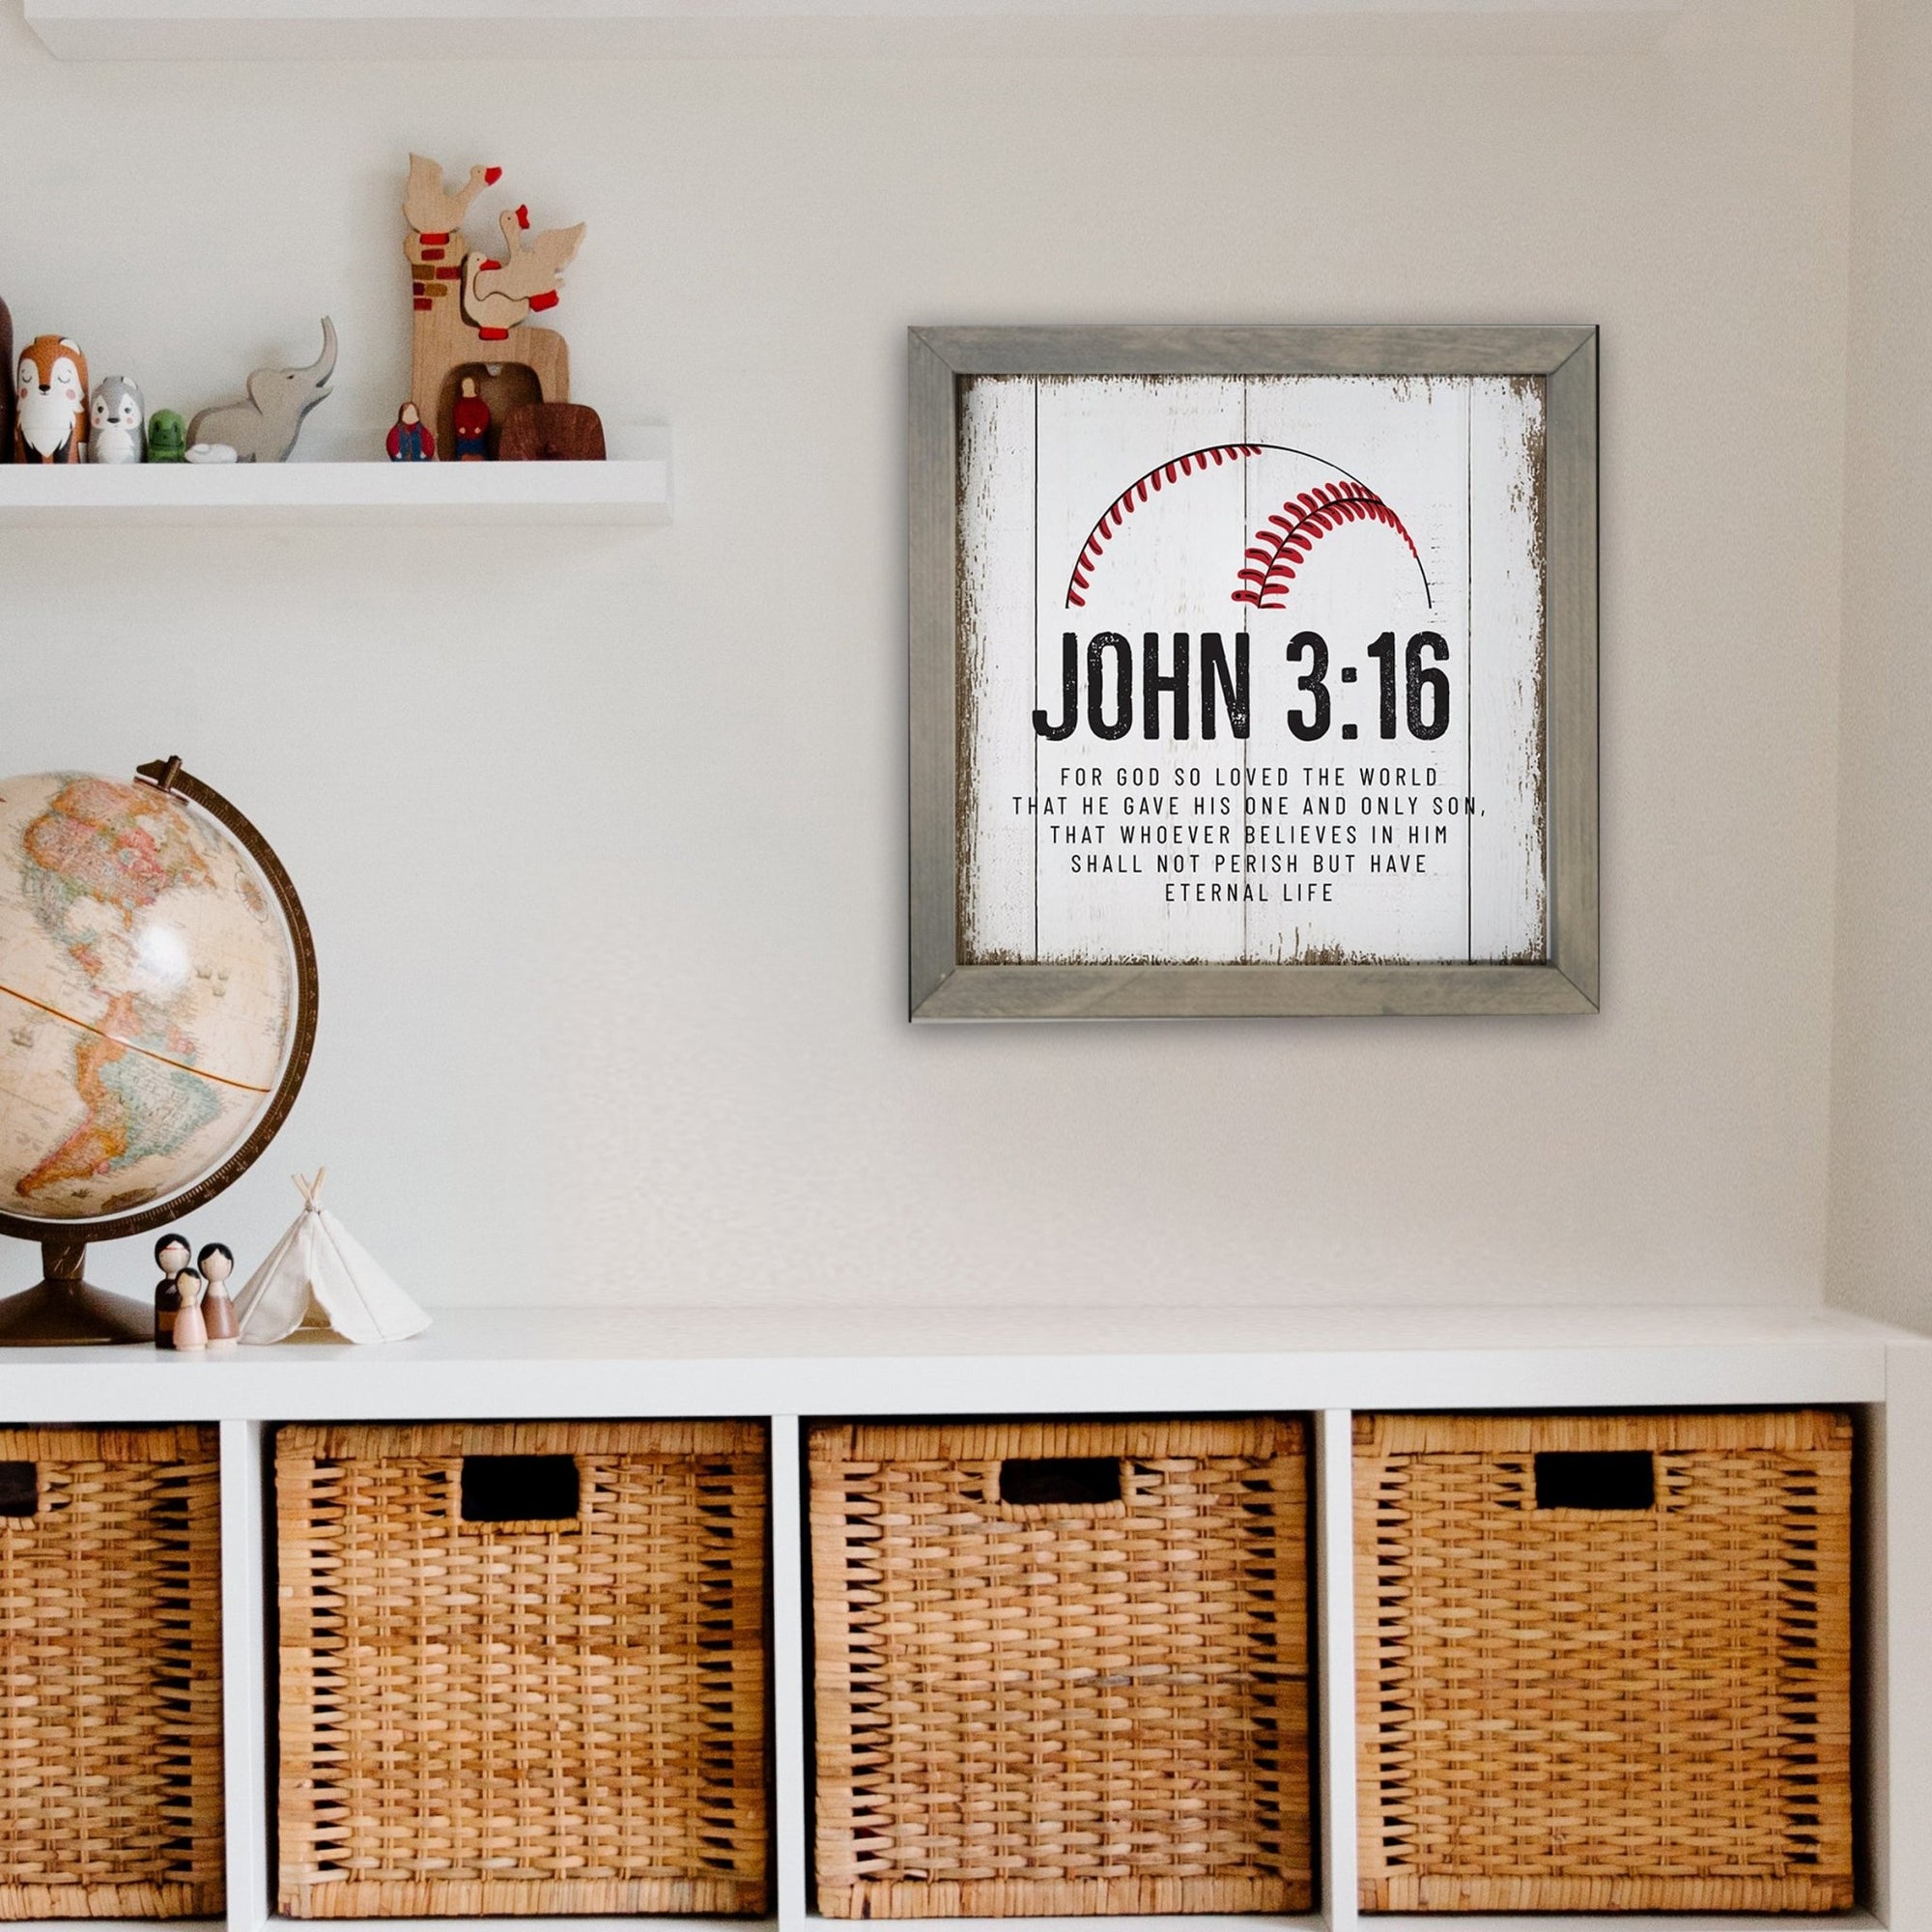 Elegant Baseball Framed Shadow Box Shelf Décor With Inspiring Bible Verses - John 3:16 - LifeSong Milestones